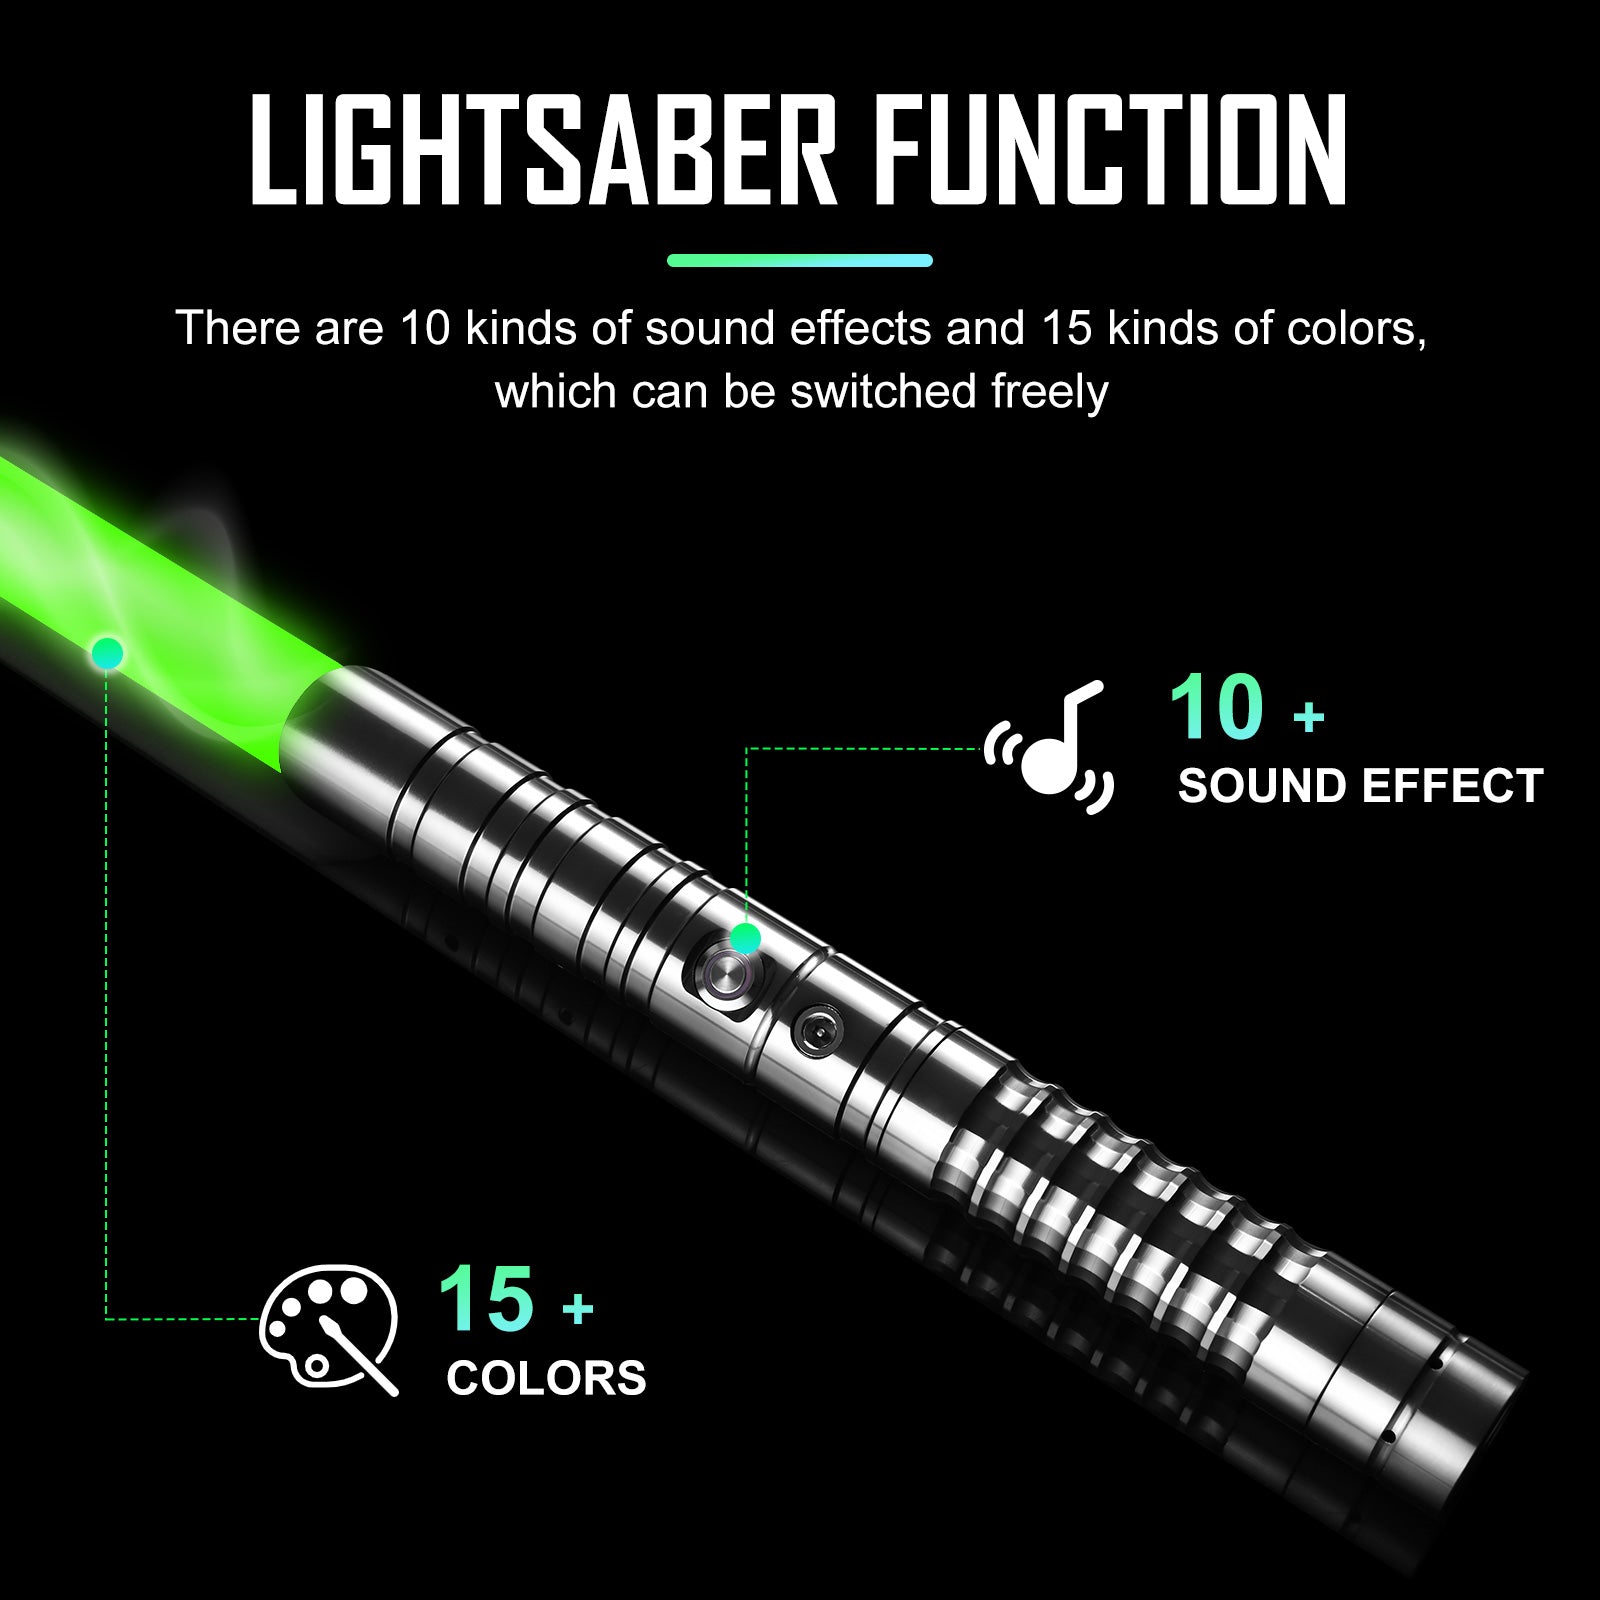 Adjustable Metal Handle RGB Lightsaber